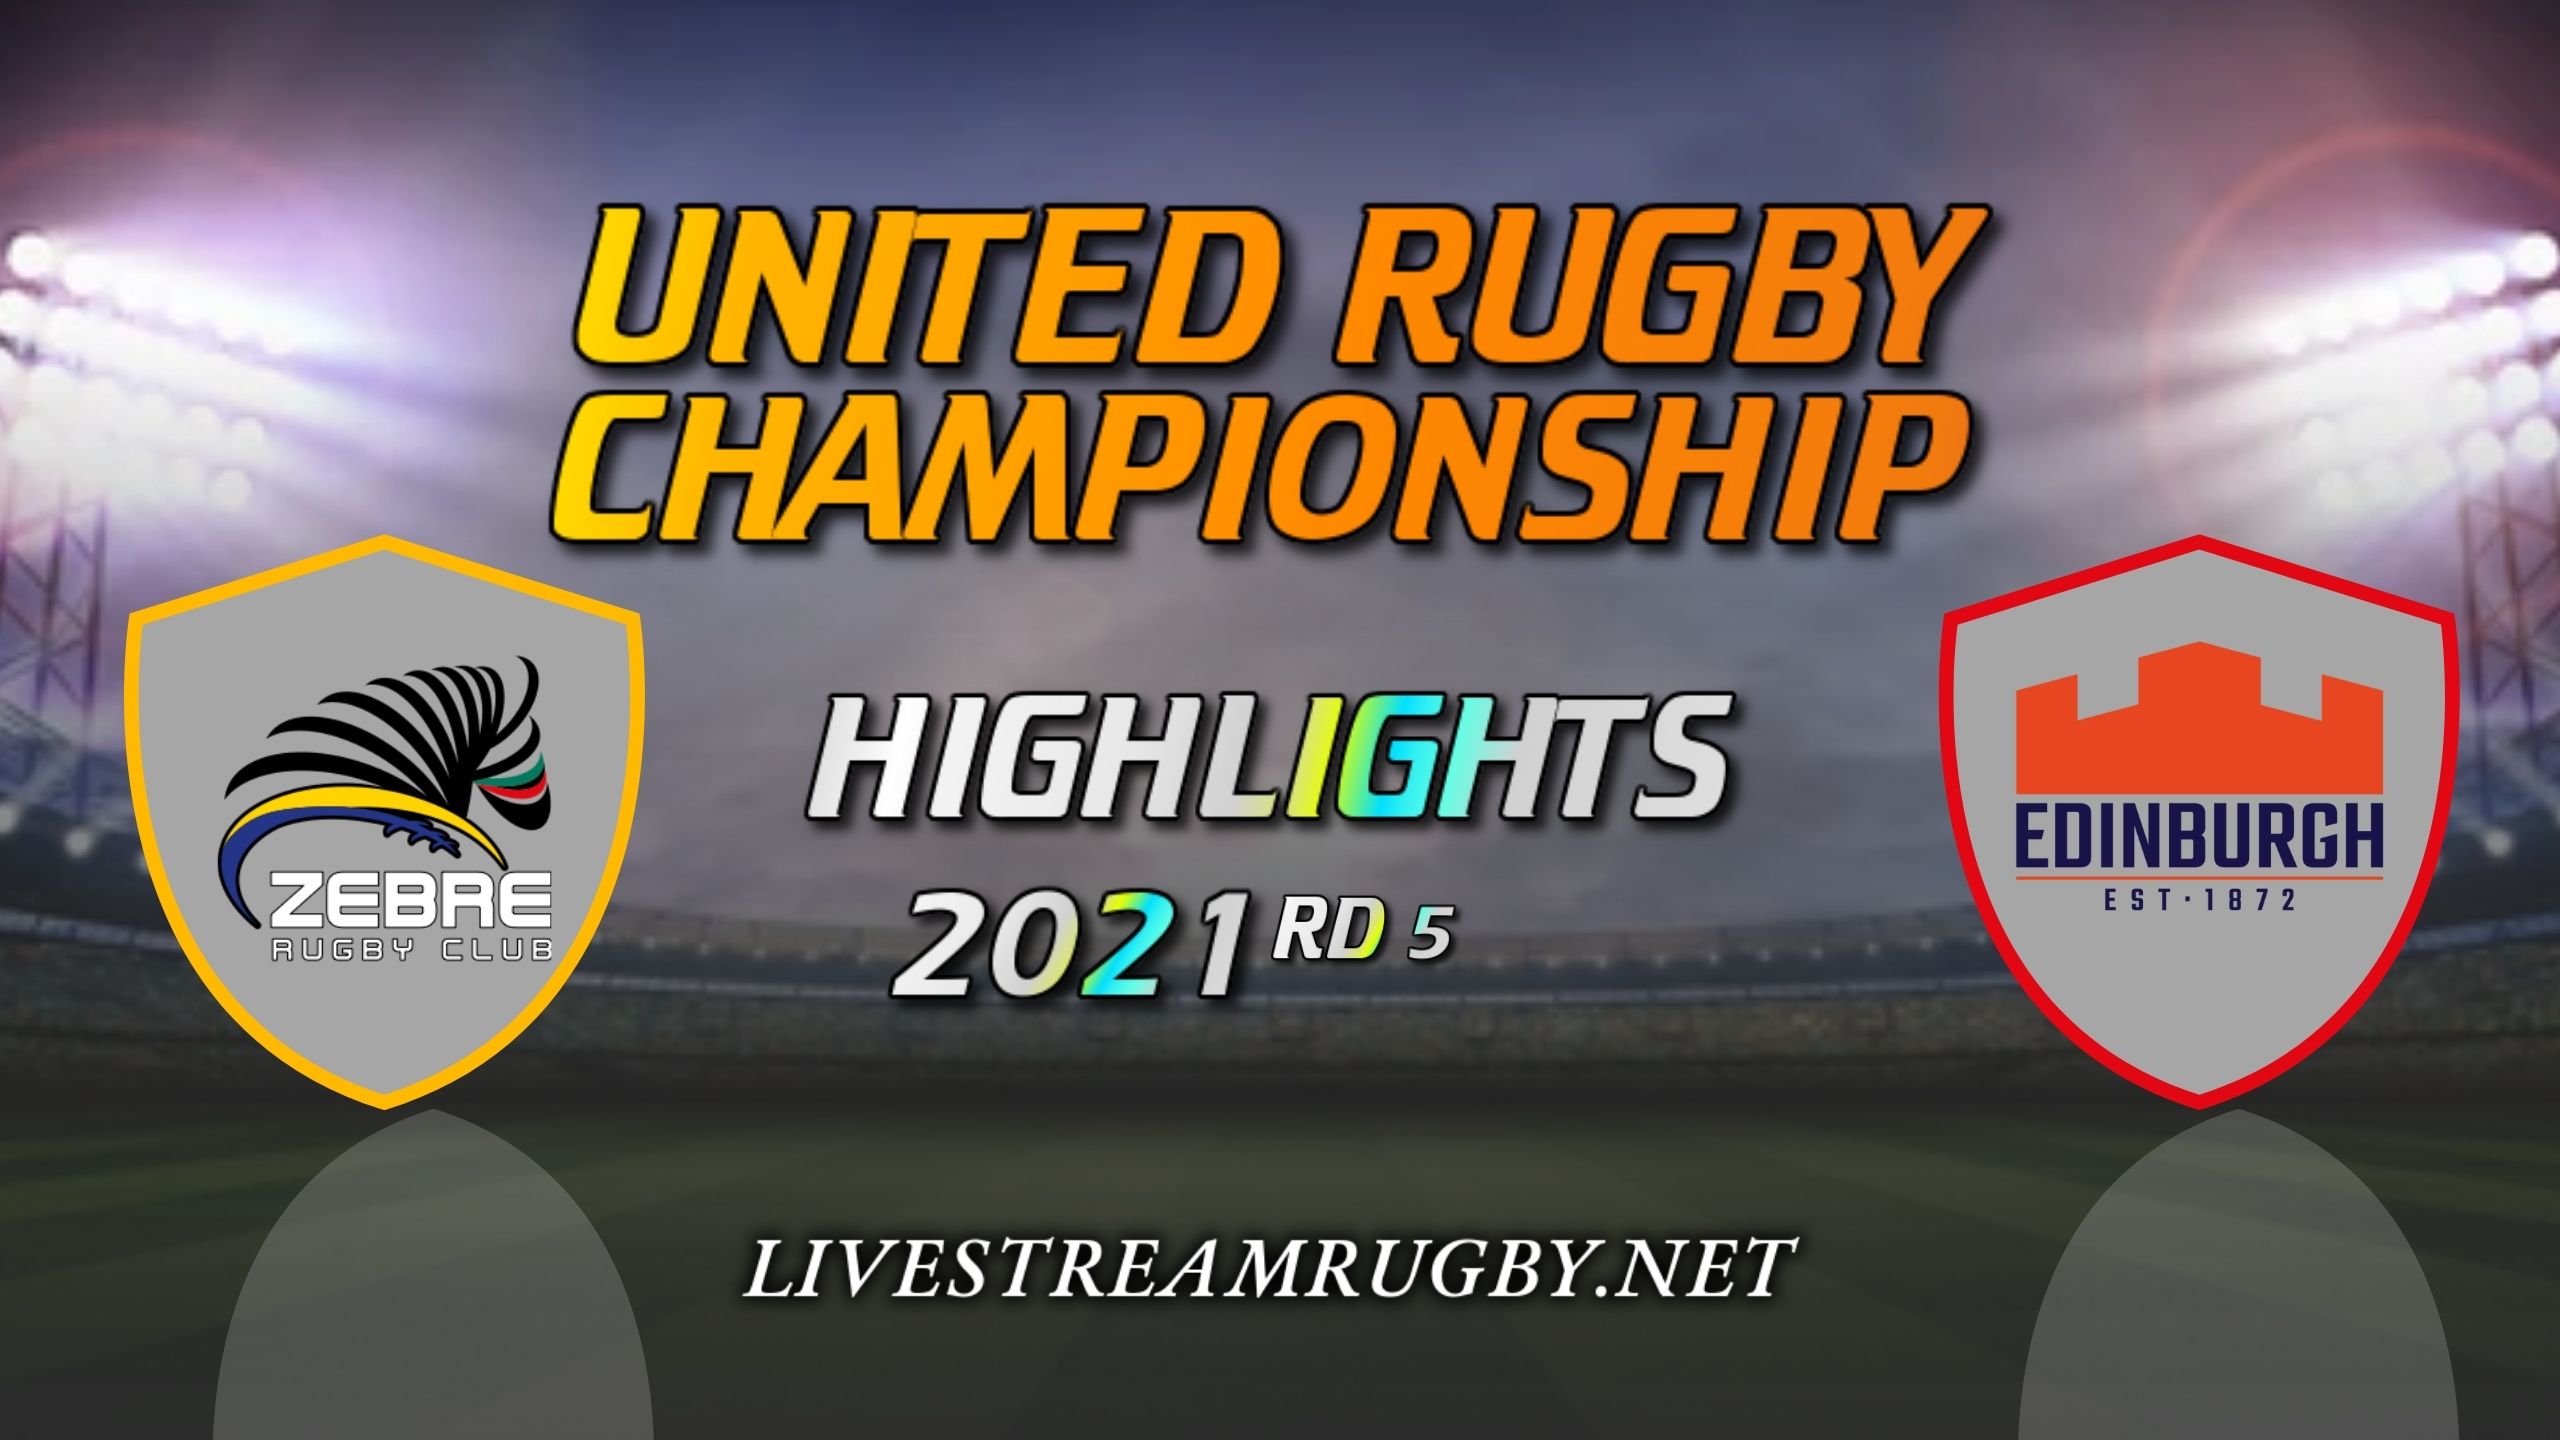 Zebre Vs Edinburgh Highlights 2021 Rd 5 United Rugby